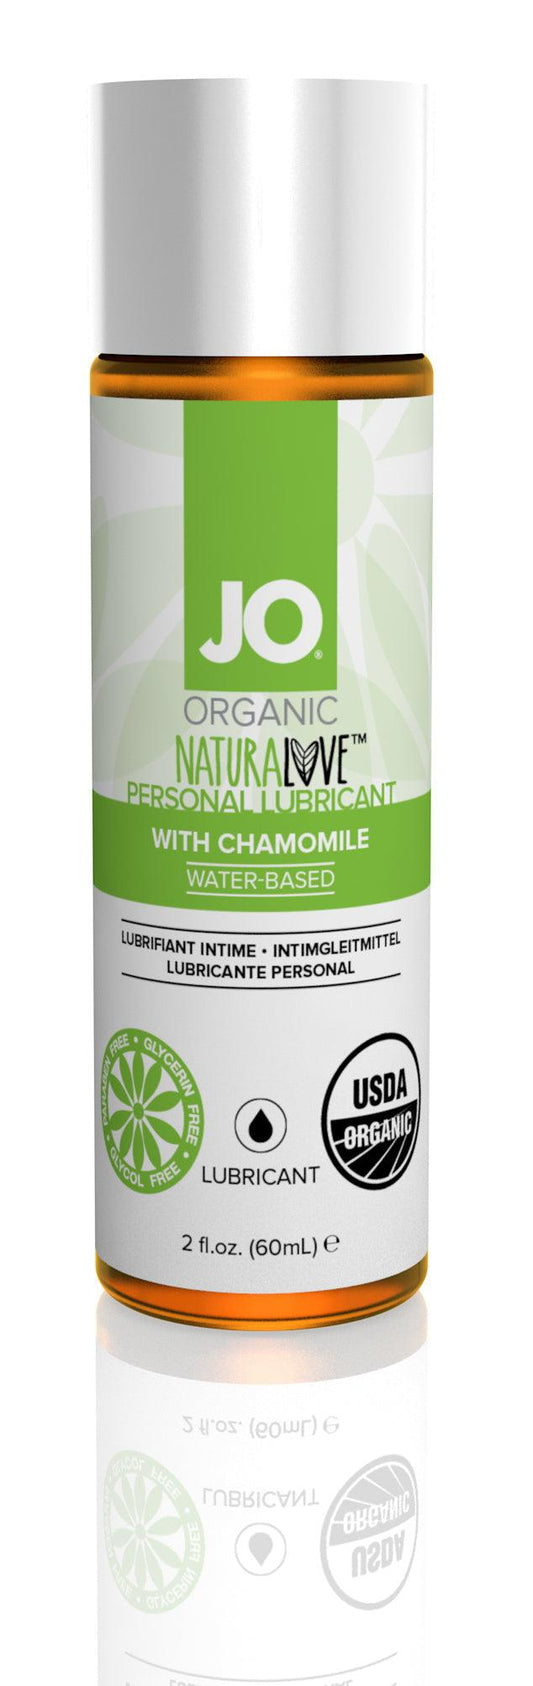 JO USDA Organic Lubricant 2 Oz / 60 ml - Take A Peek